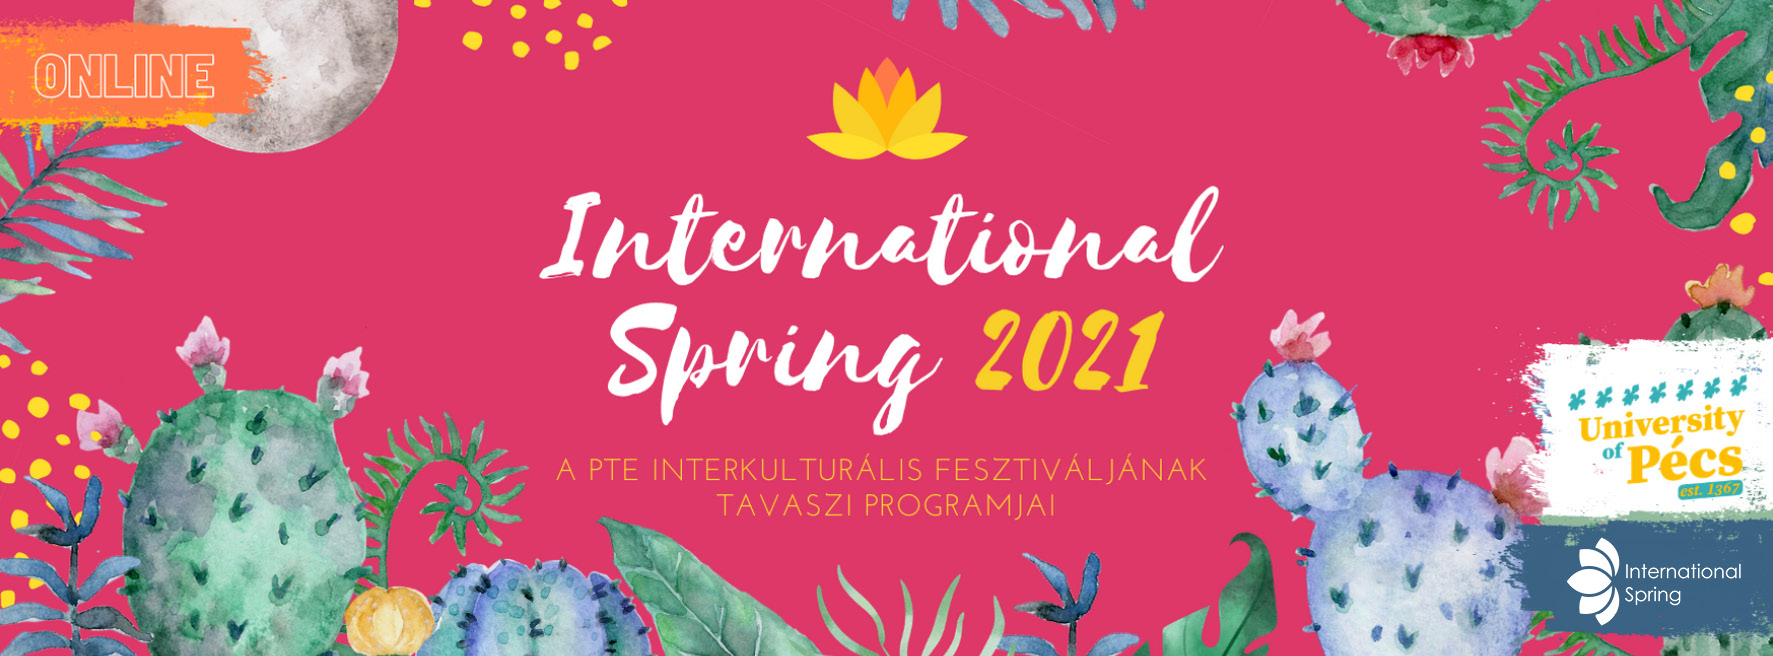 International Spring Pécs - Pécsi Nemzetközi Tavasz, PTE